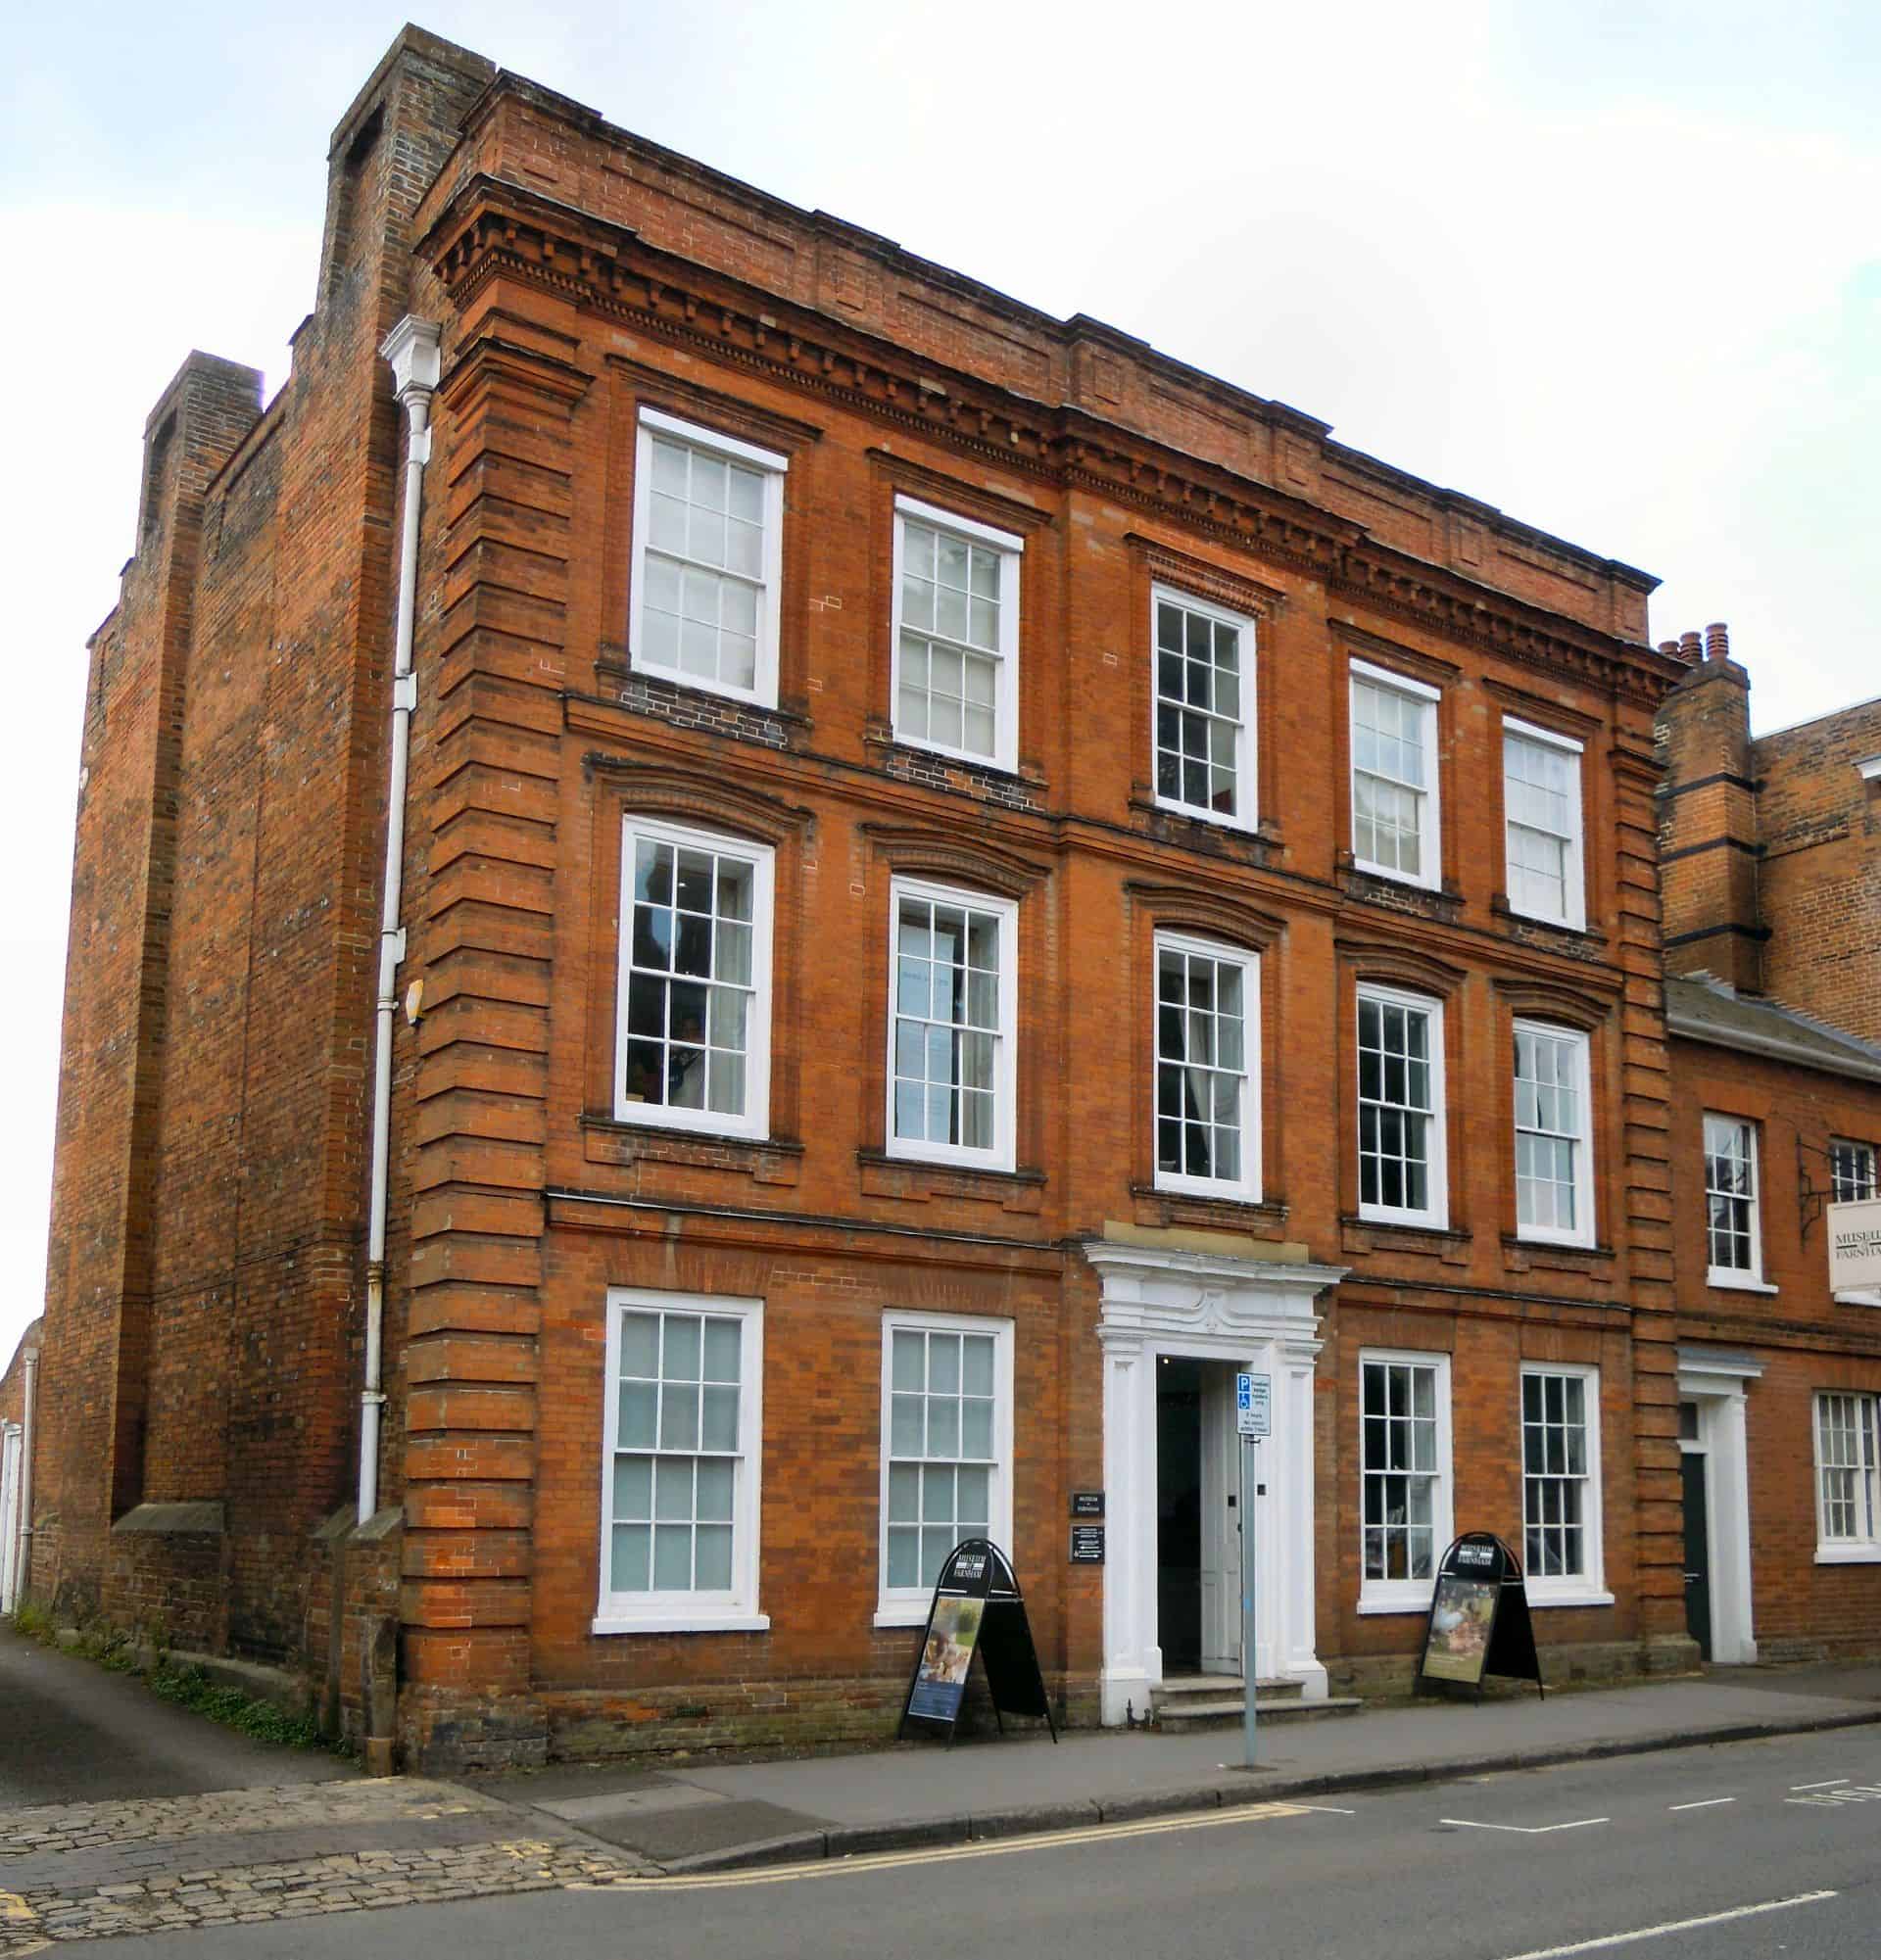 The Museum of Farnham in UK